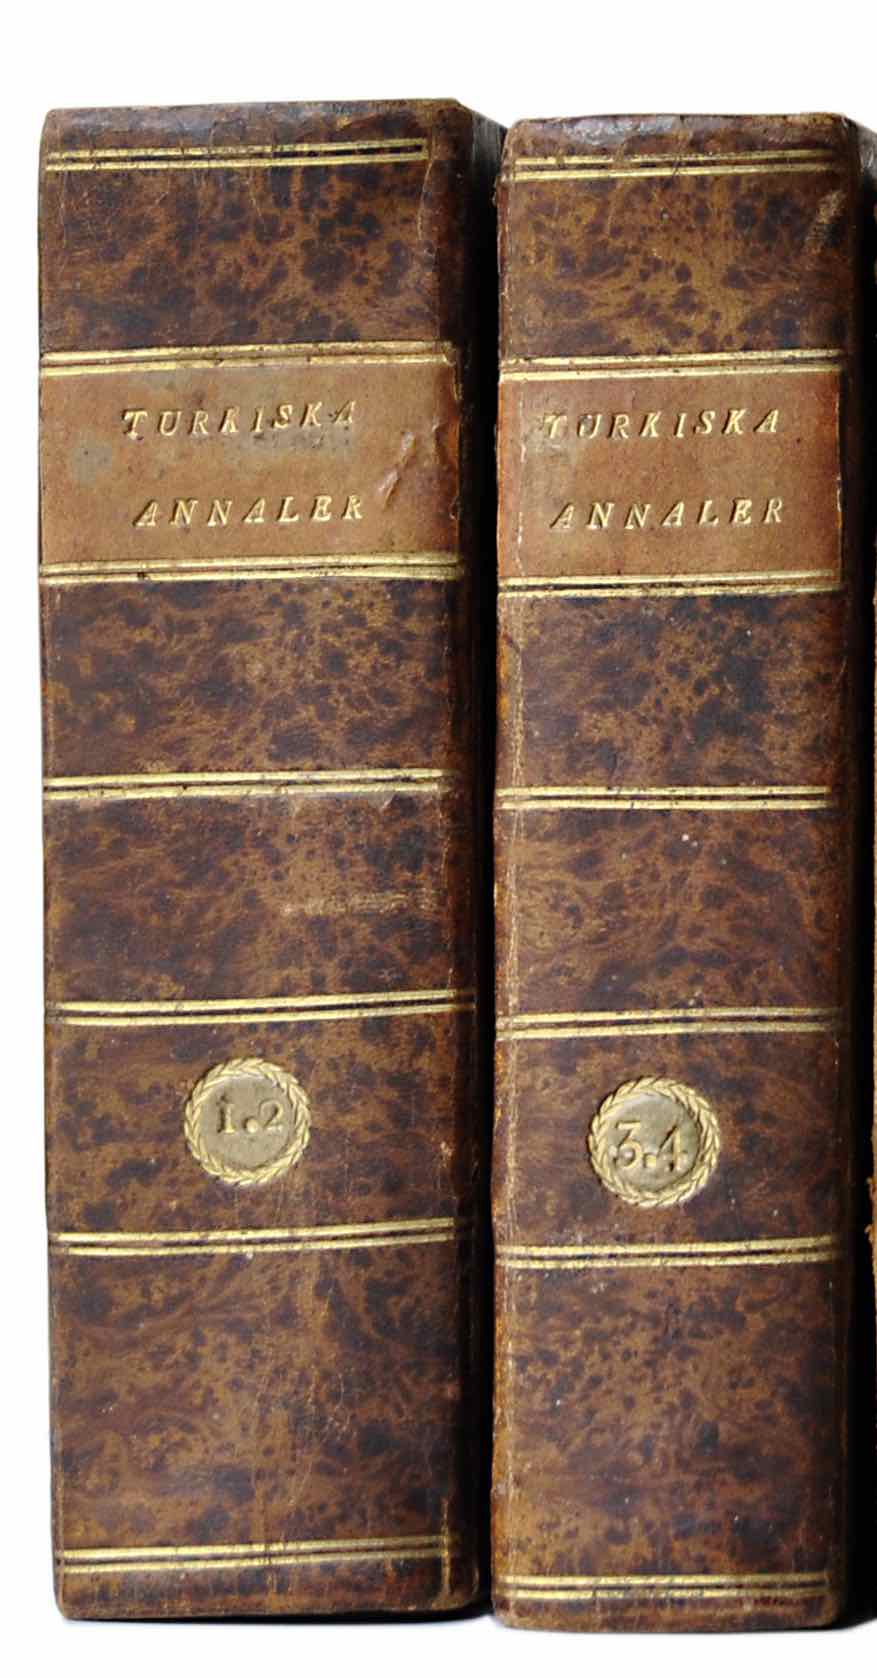 NORBERG, MATTHIAS: - Turkiska rikets annaler sammandragne ur dess egna urkunder. Parts I-II:1-2 + III-IV (complete) in two volumes. Christianstad, F.F. Cedergren & Hernsand, Jonas Svedbom, 1822.